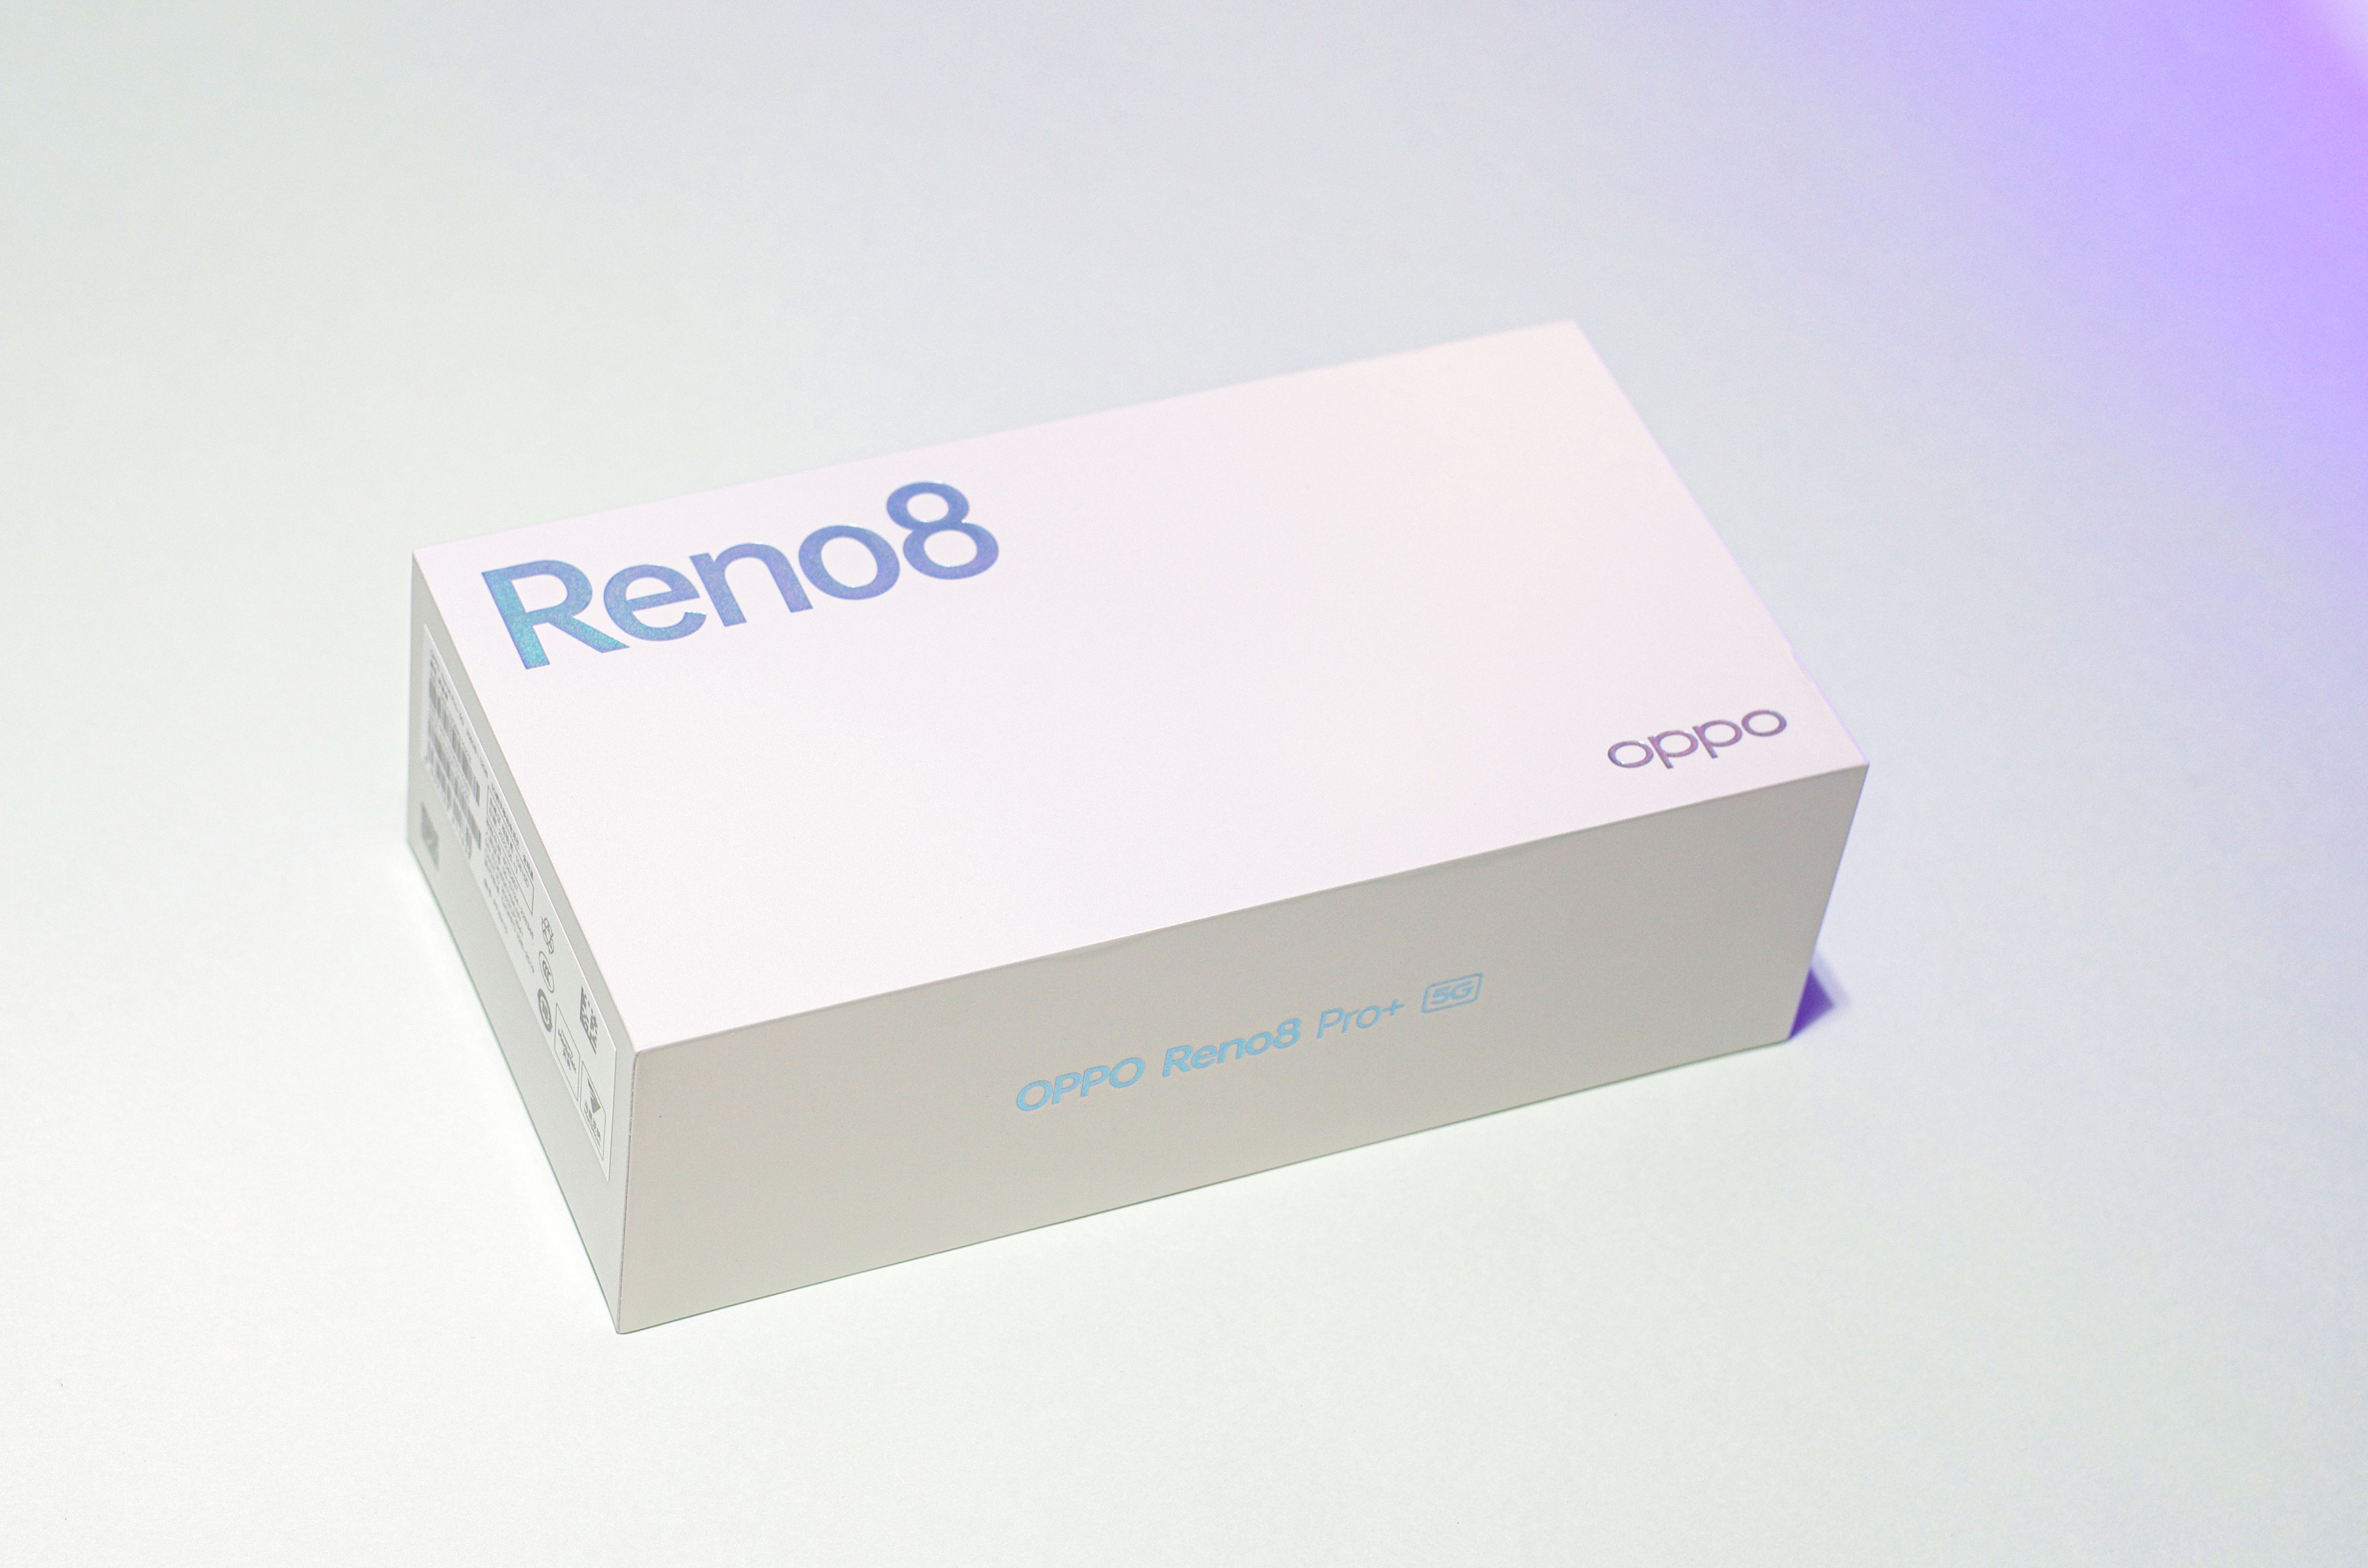 OPPO Reno 8 Pro+评测：精致如碧玉 有颜有双芯